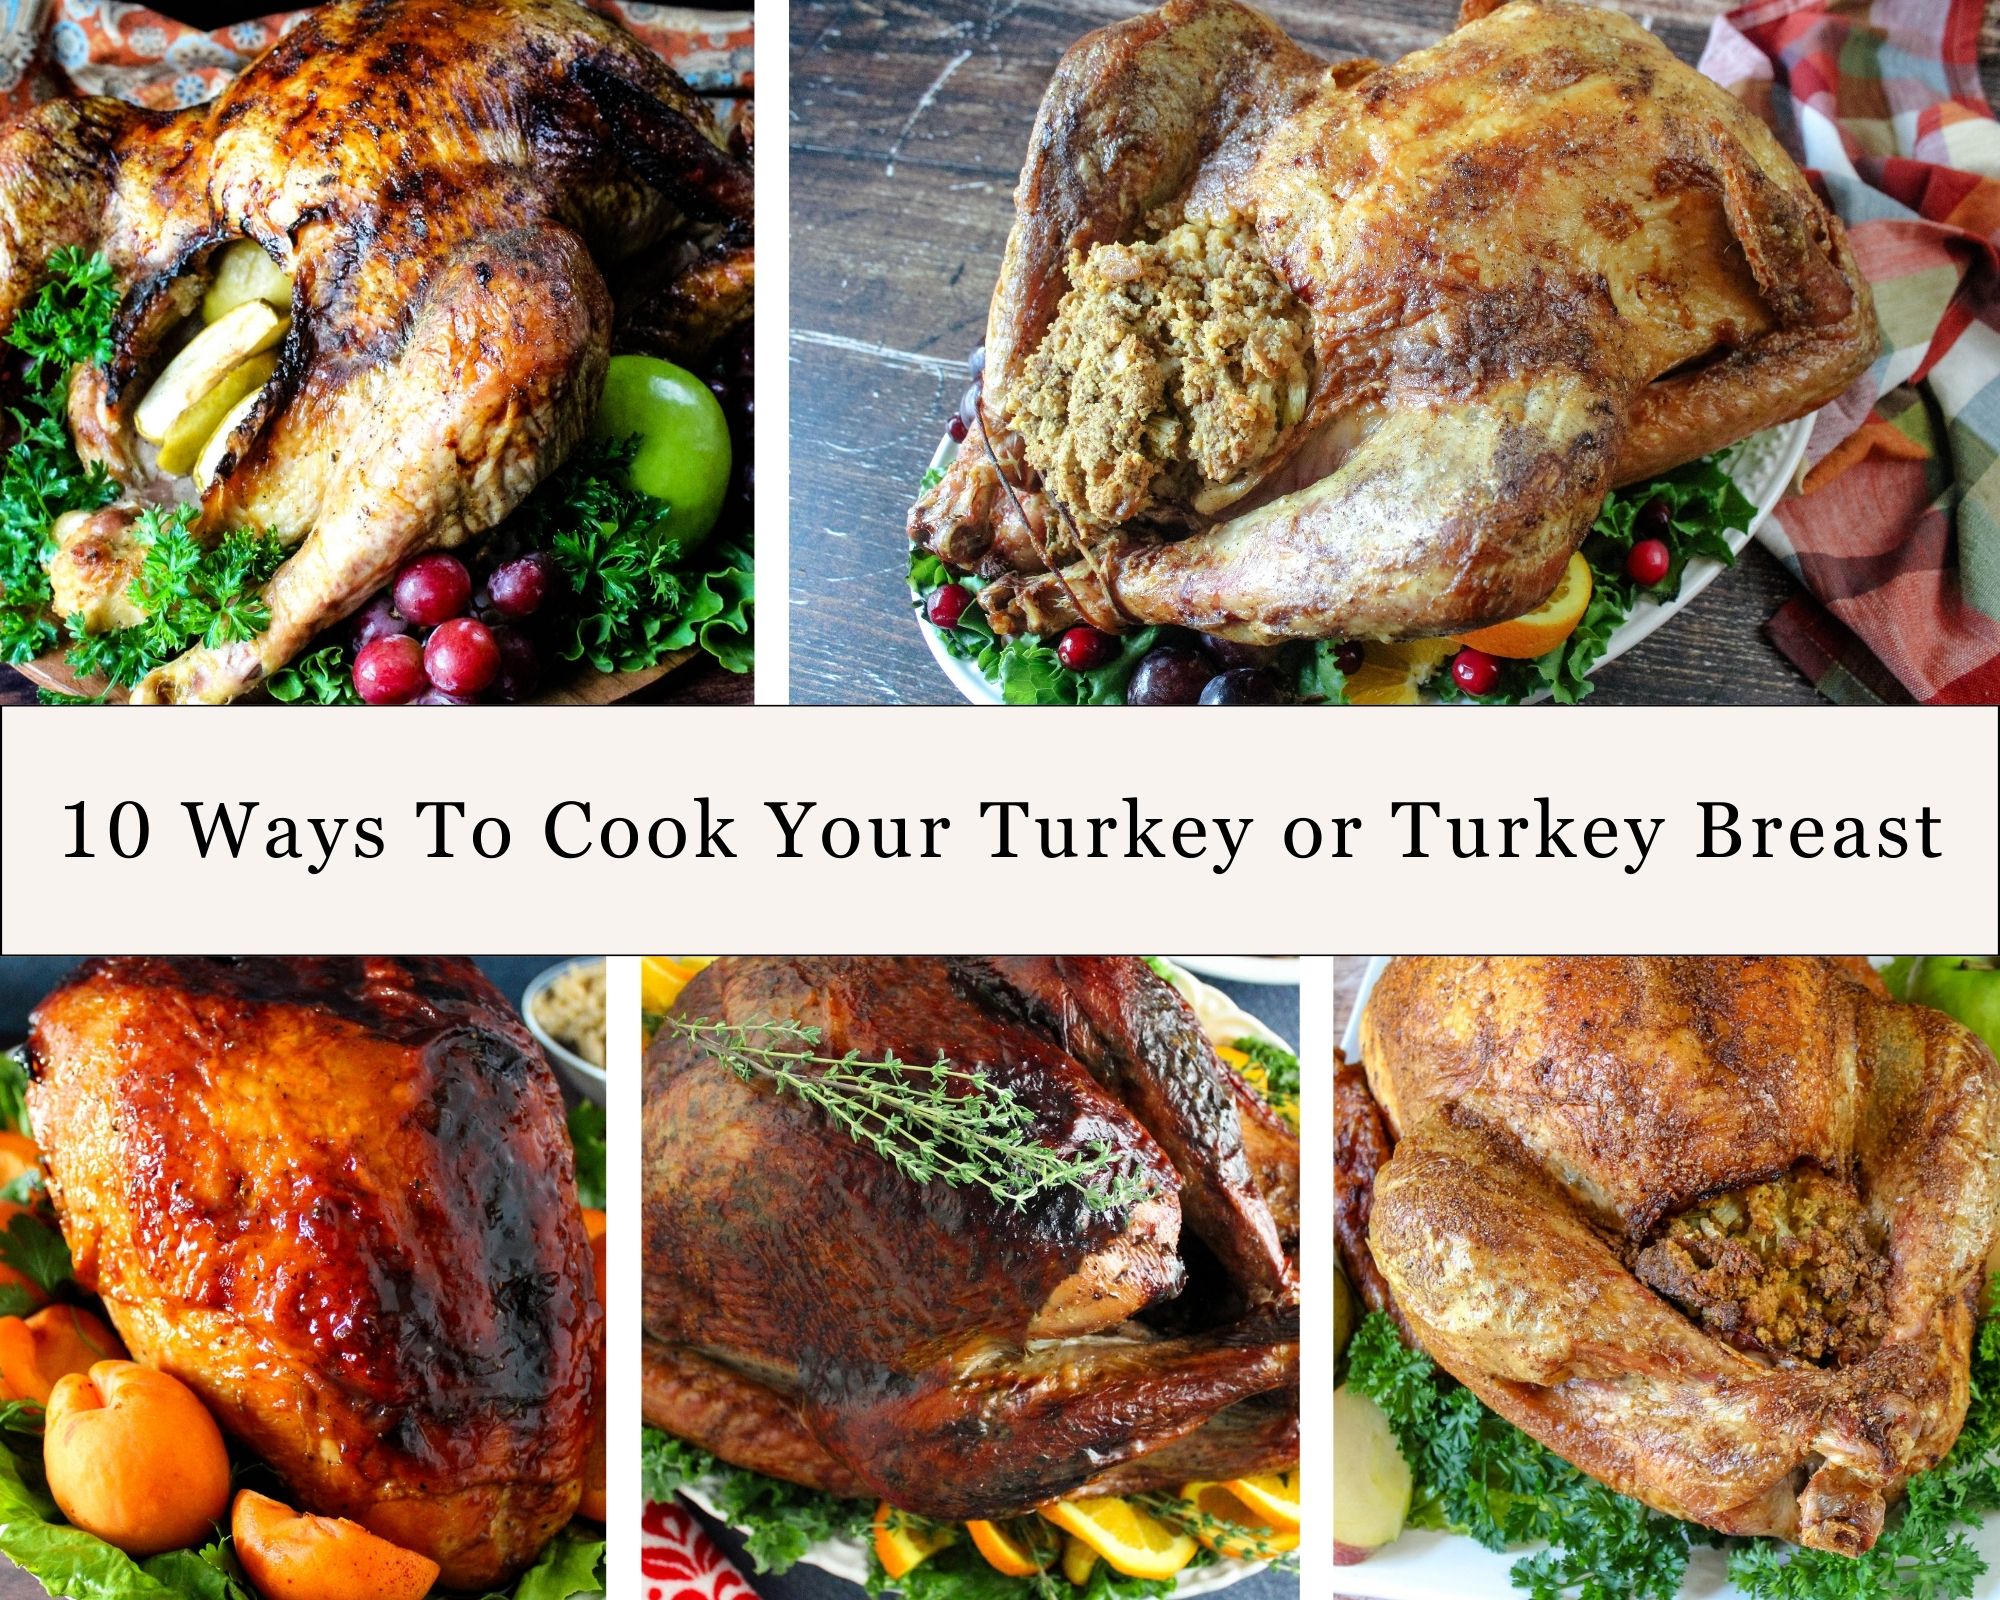 10 Ways To Cook Your Turkey or Turkey Breast